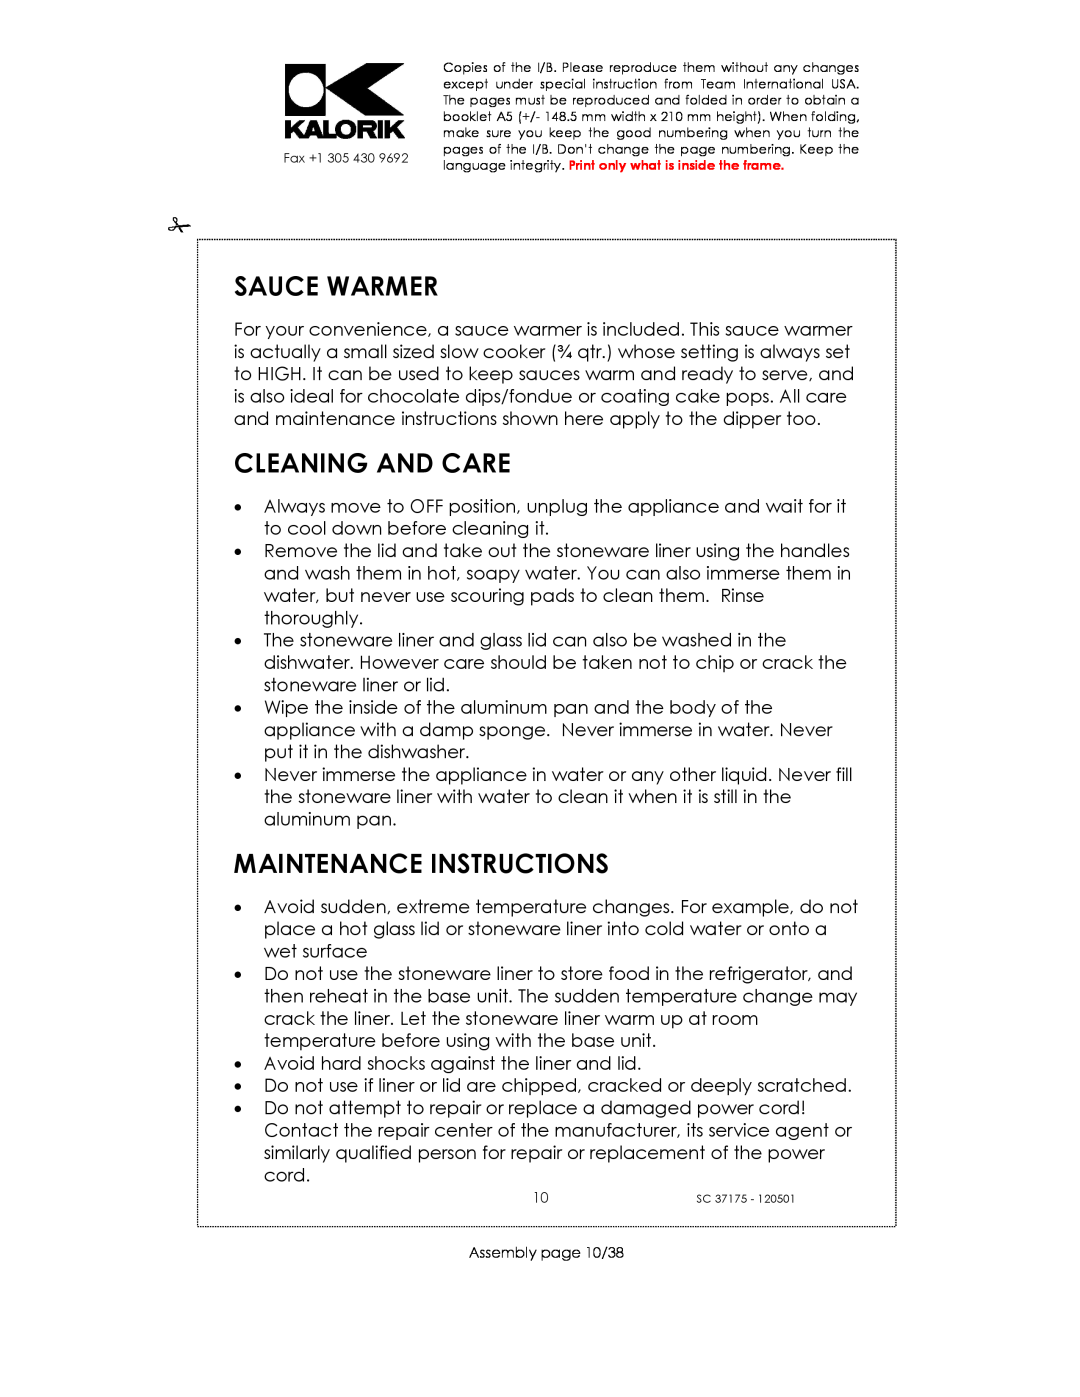 Kalorik SC 37175 manual Sauce Warmer, Cleaning And Care, Maintenance Instructions 